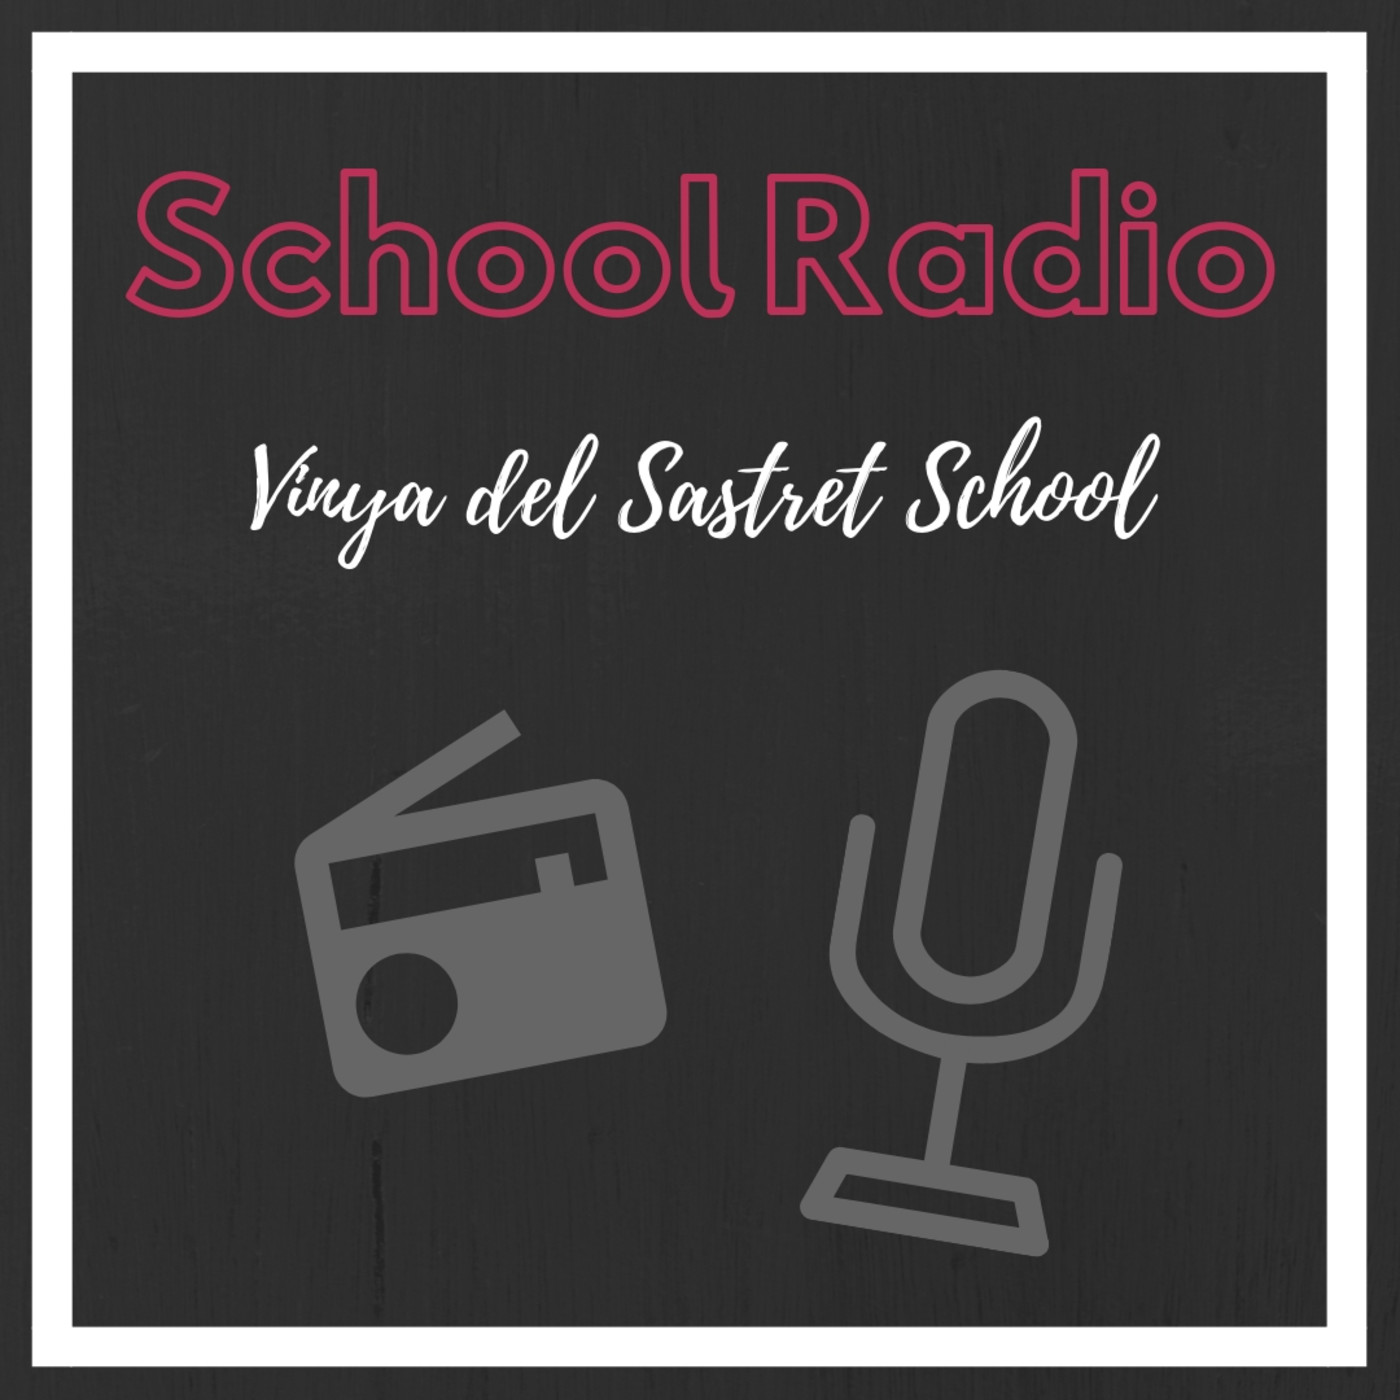 School Radio Vinya del Sastret